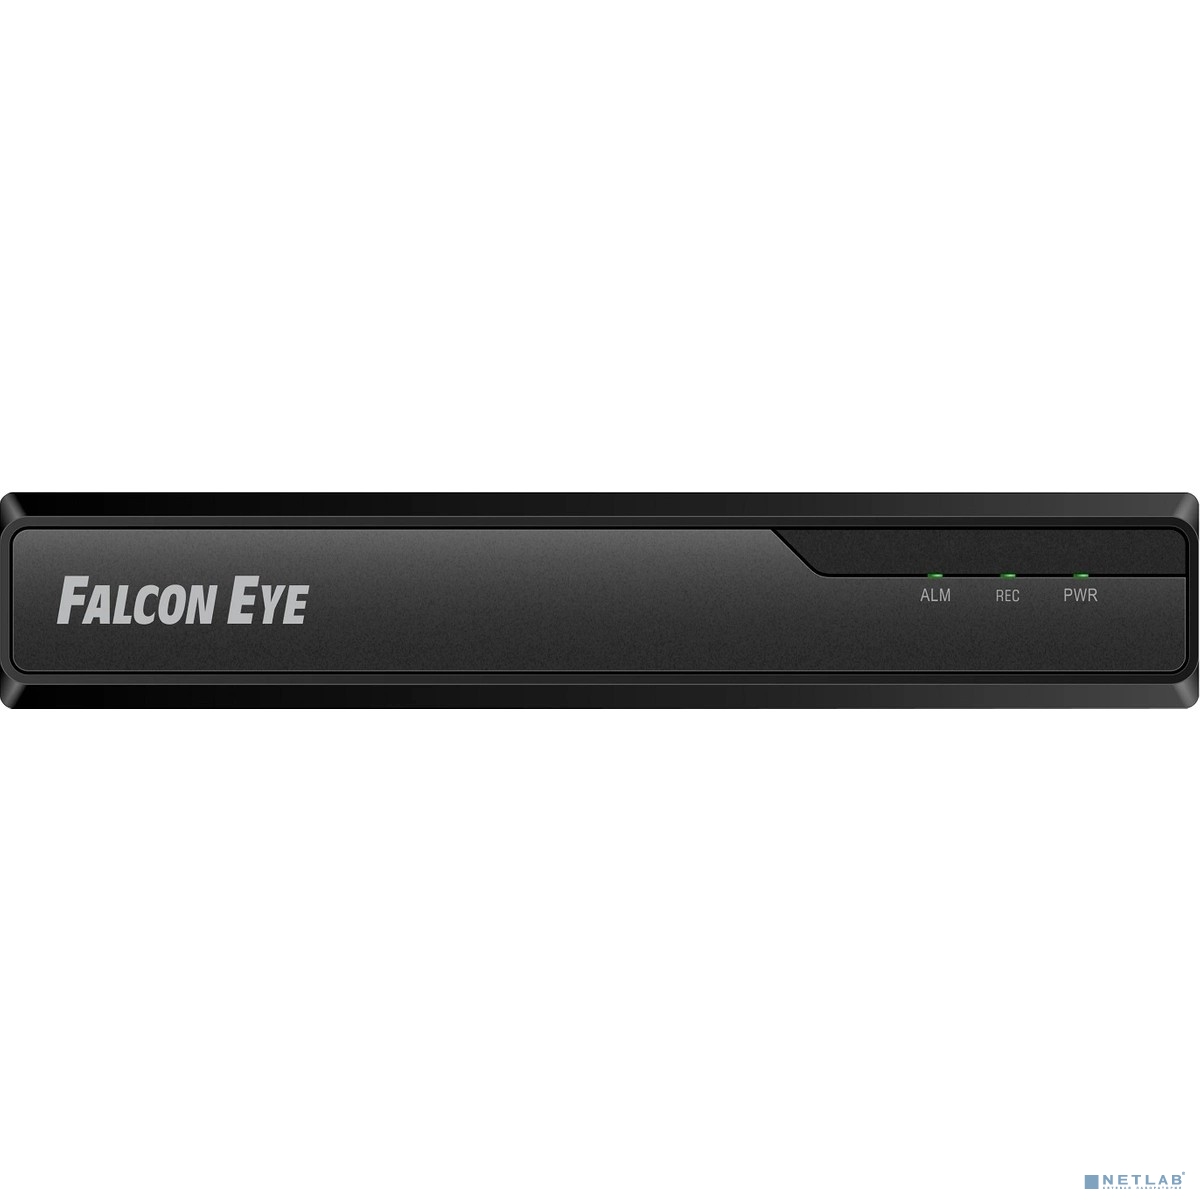 Falcon Eye FE-MHD1104 4 канальный 5 в 1 регистратор: запись 4кан 1080N*25k/ с; Н.264/ H264+; HDMI, VGA, SATA*1 (до 6 Tb HDD), 2 USB; Аудио 1/ 1; Протокол ONVIF, RTSP, P2P; Мобильные платформы Android/ IOS